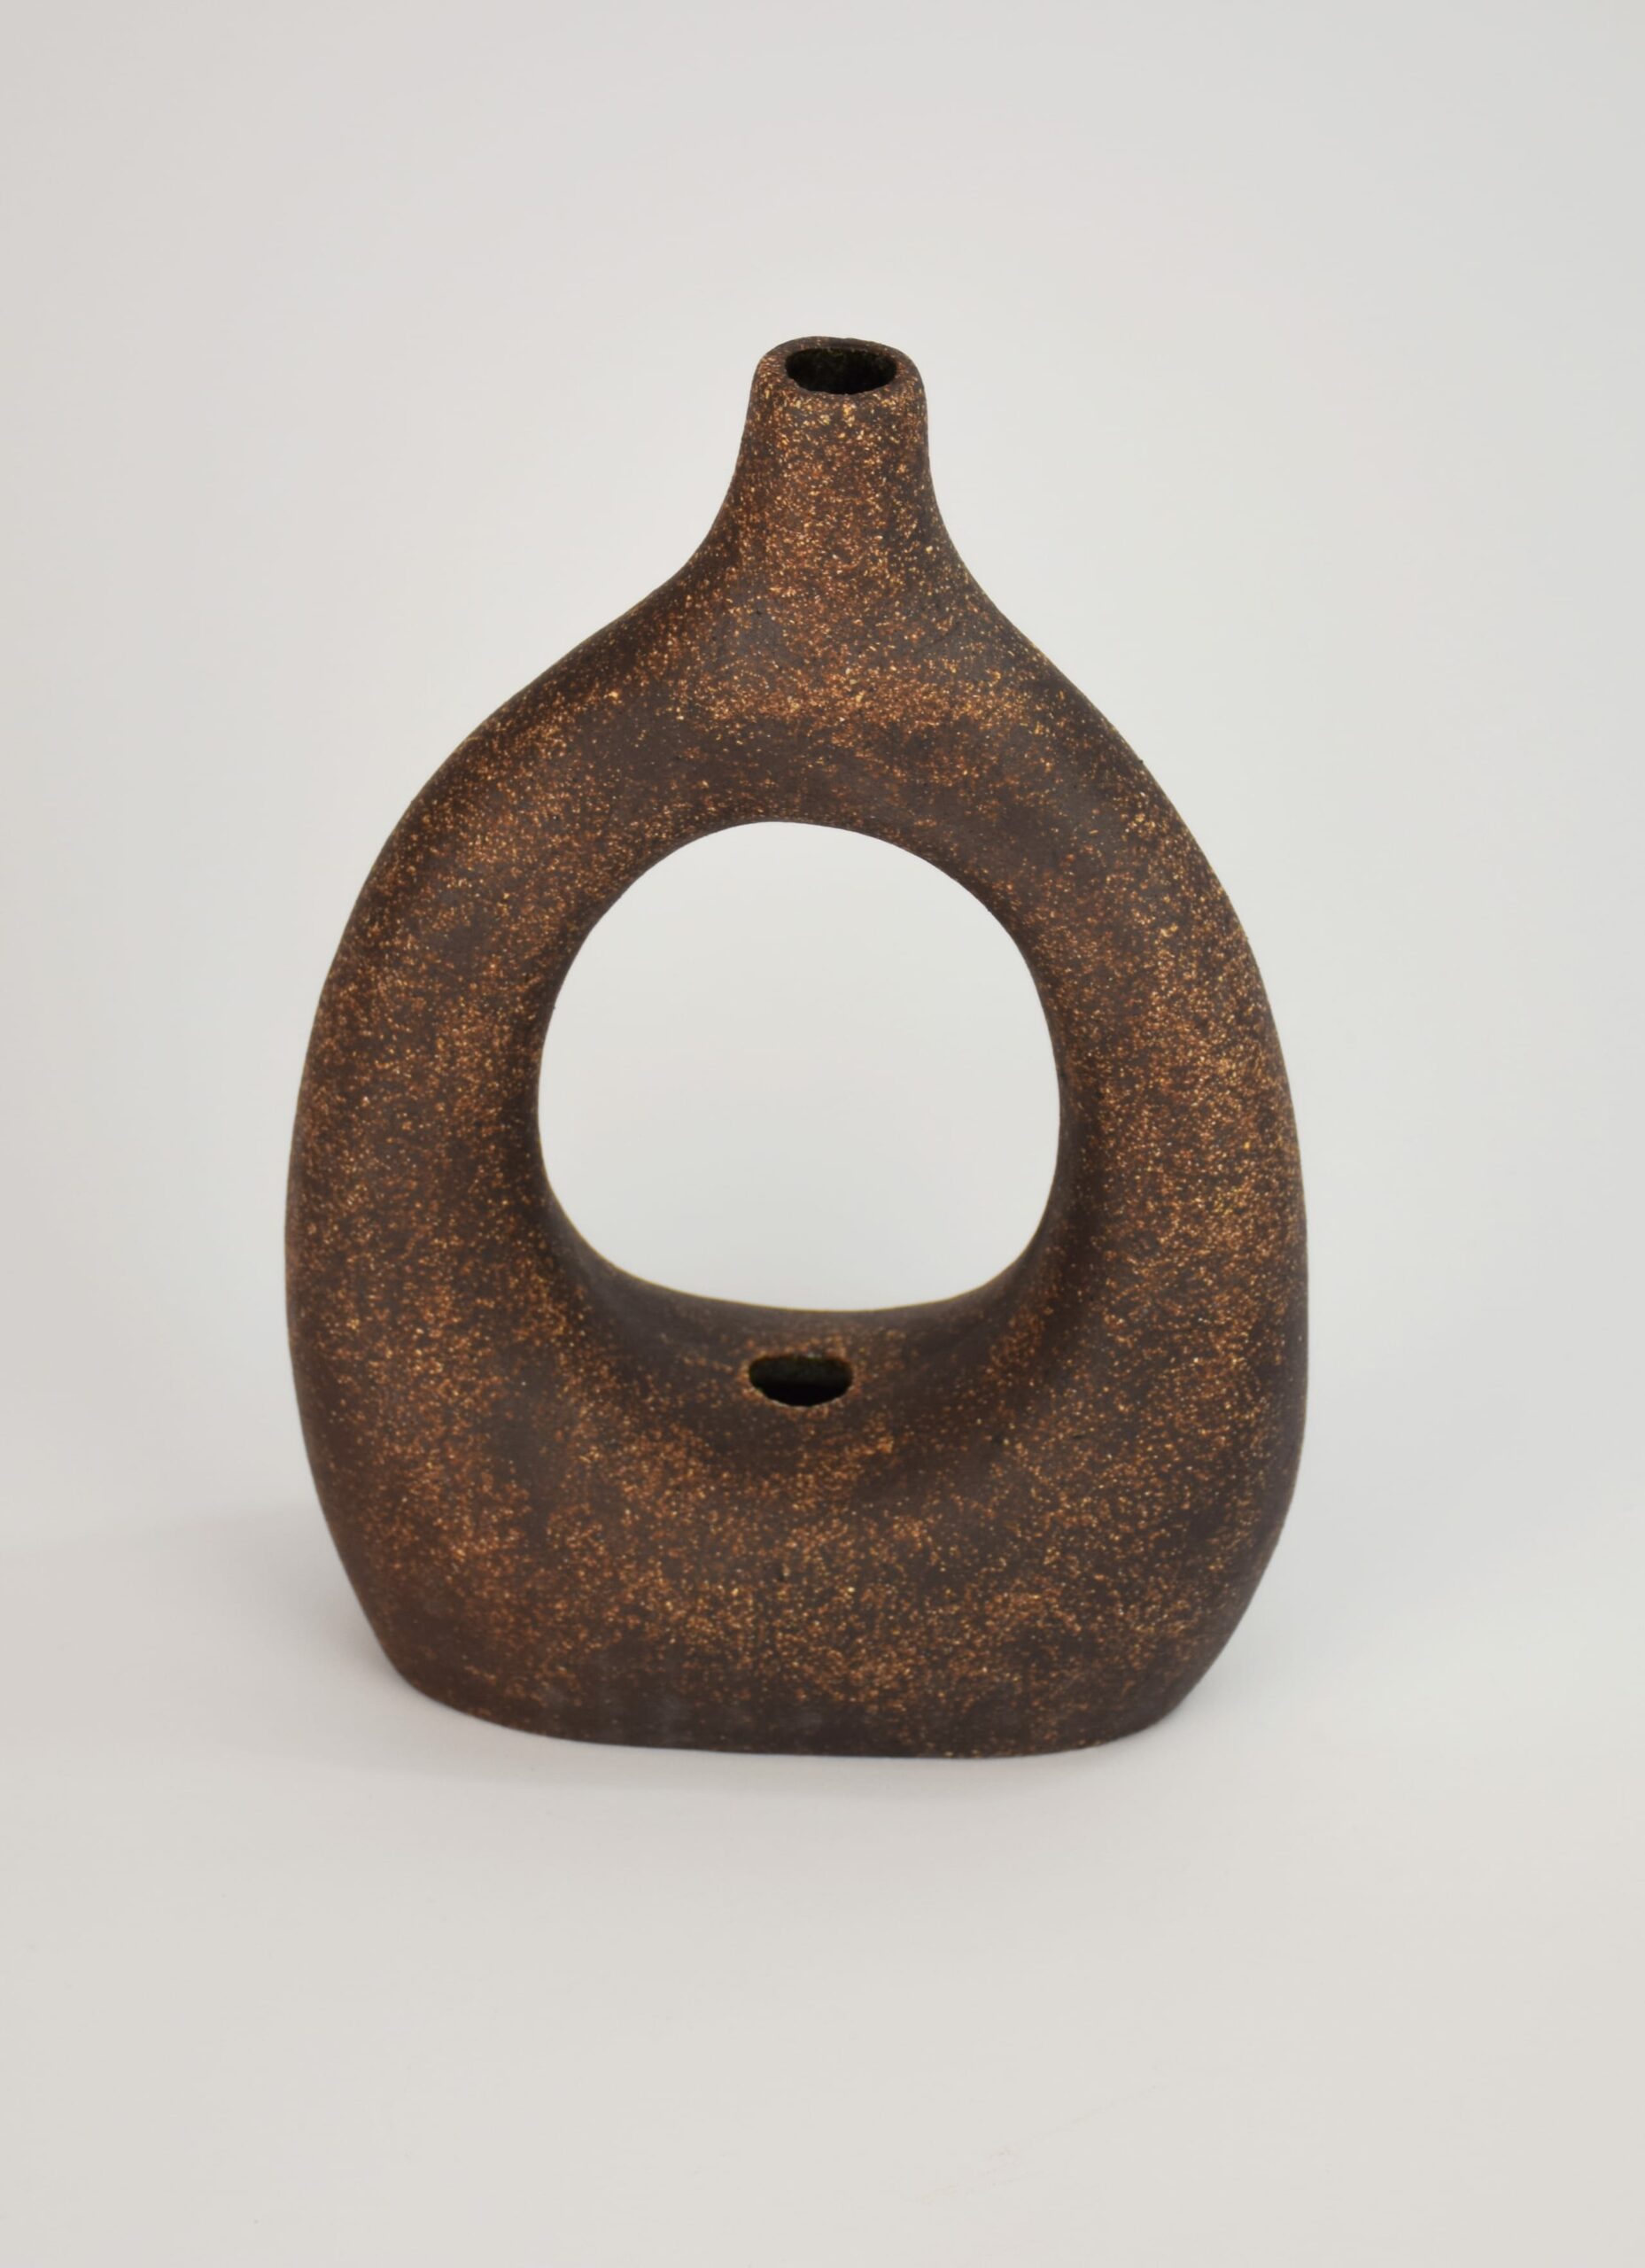 Viv Lee - Handmade stoneware vessel - Limited edition - Holo06 - dark brown